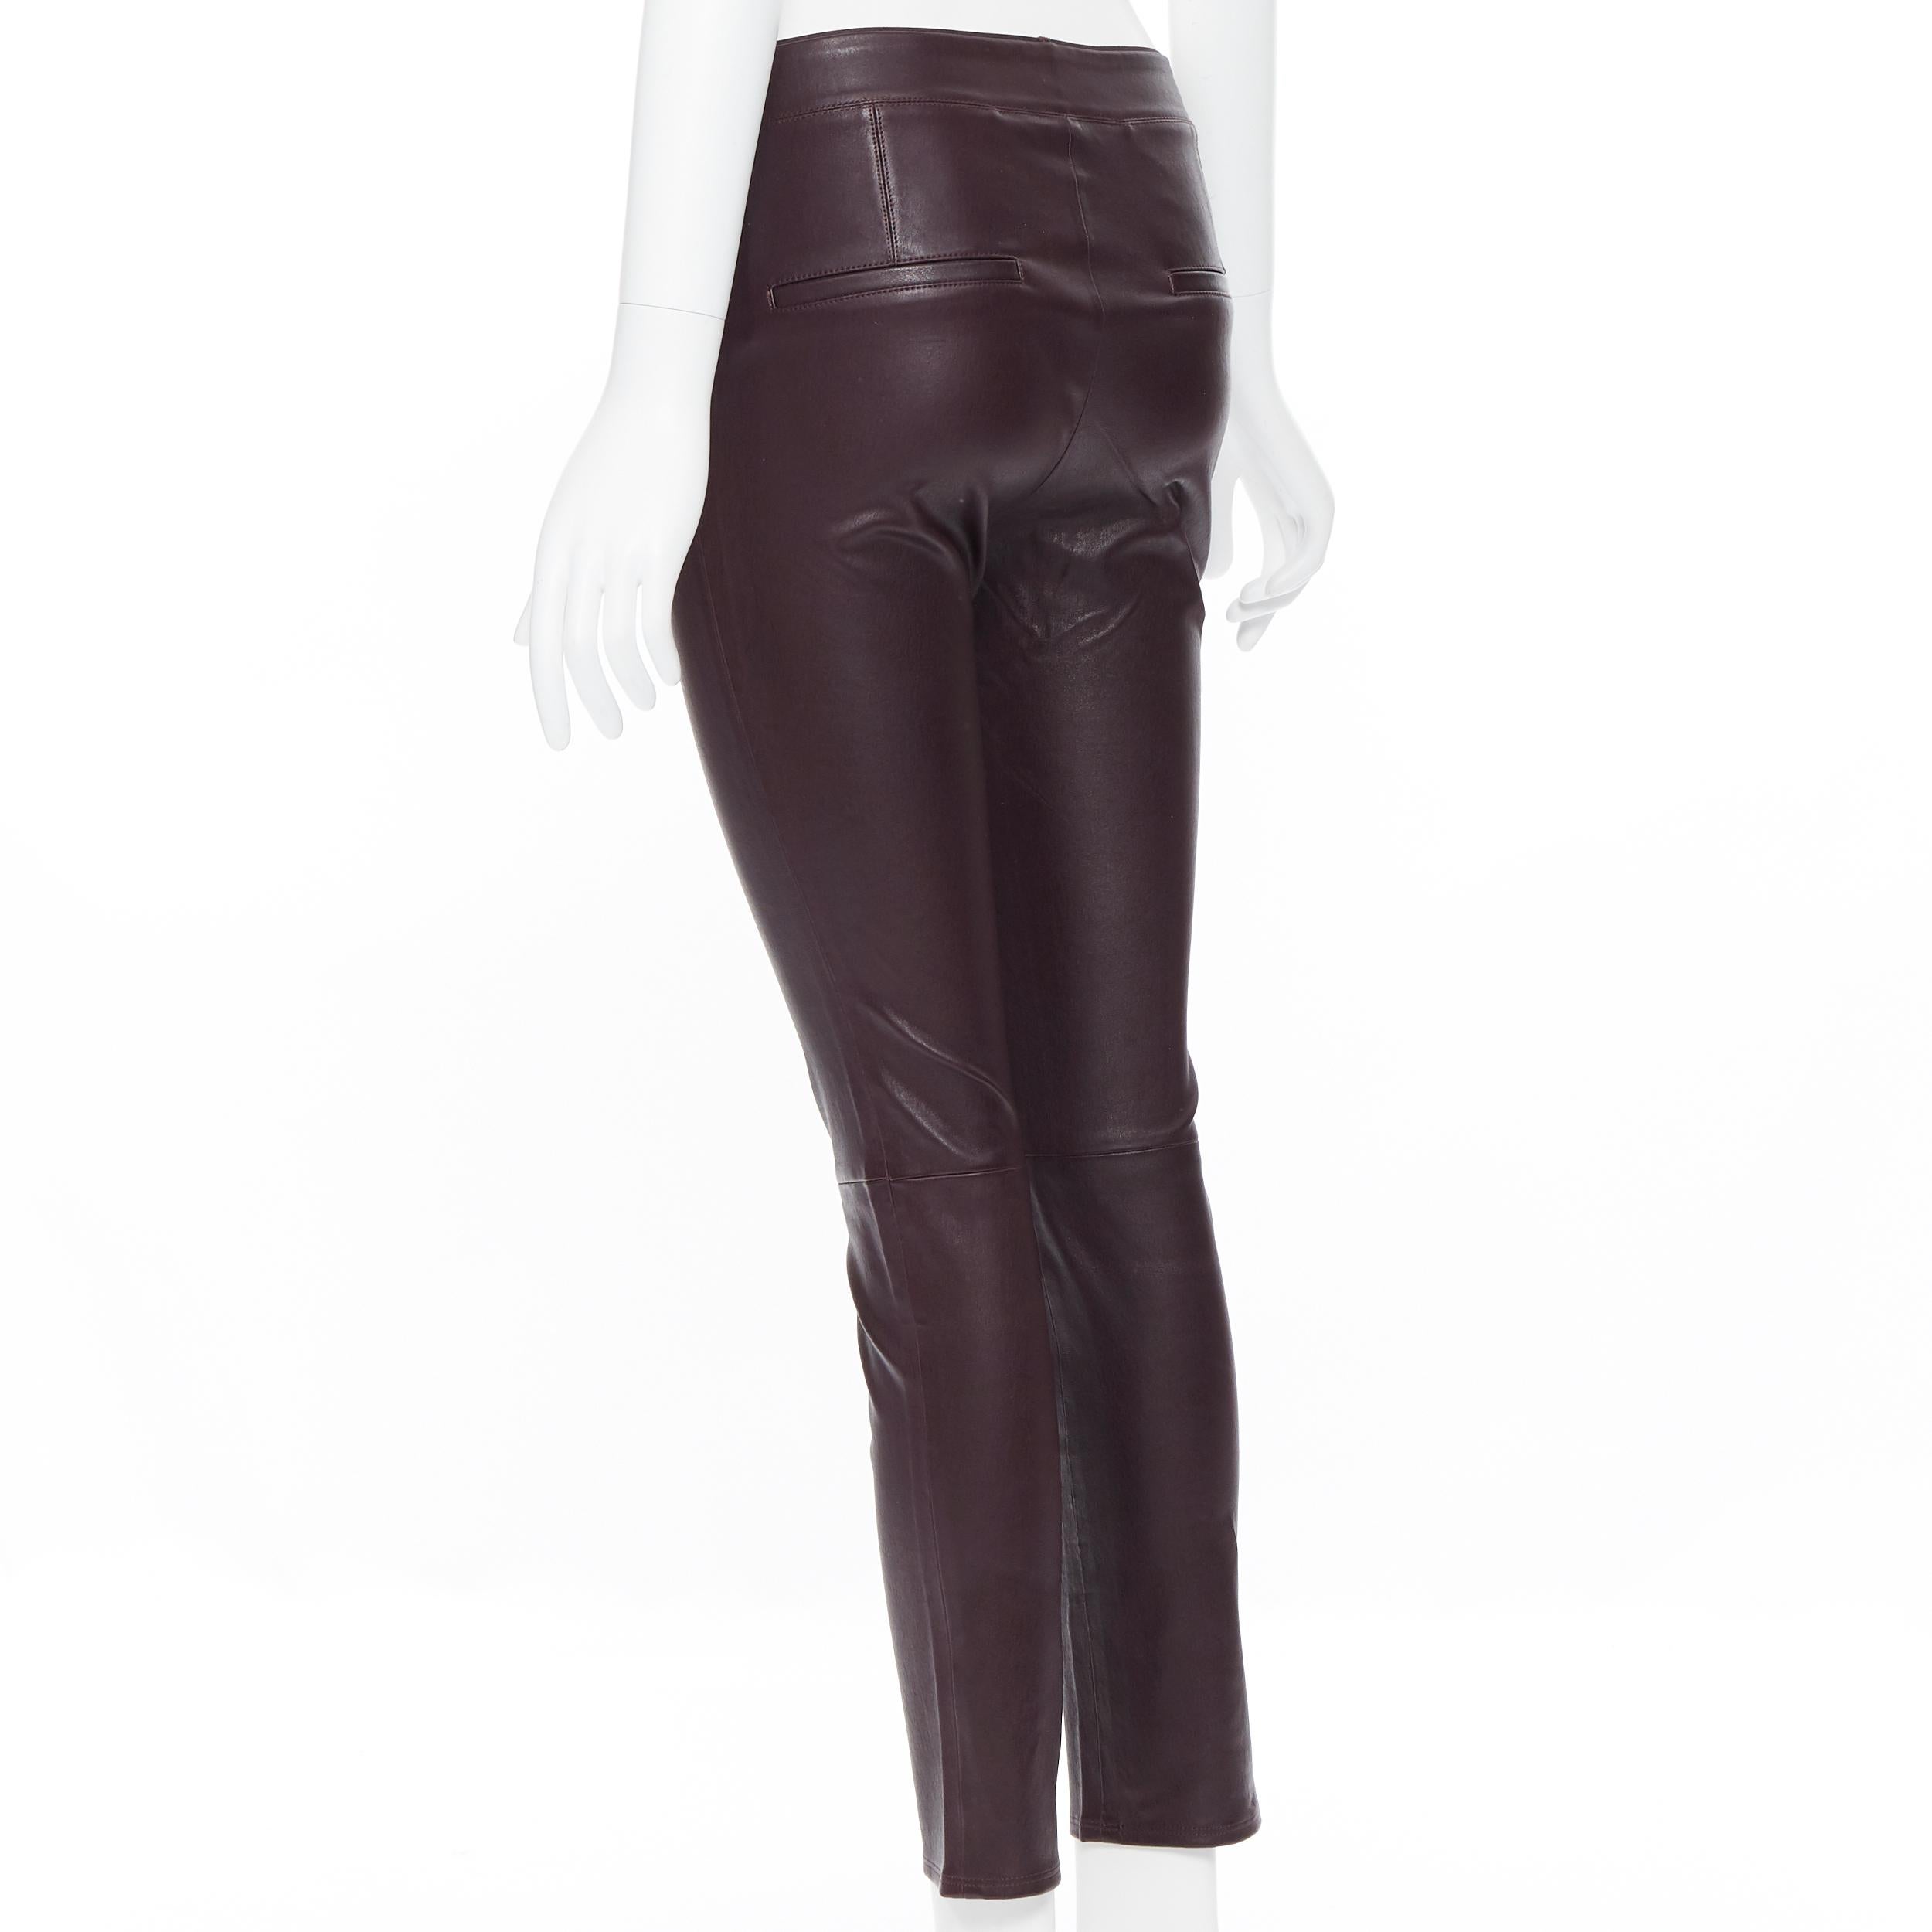 HELMUT LANG 100% leather dark burgundy minimal stretchy skinny leg pants XS 1